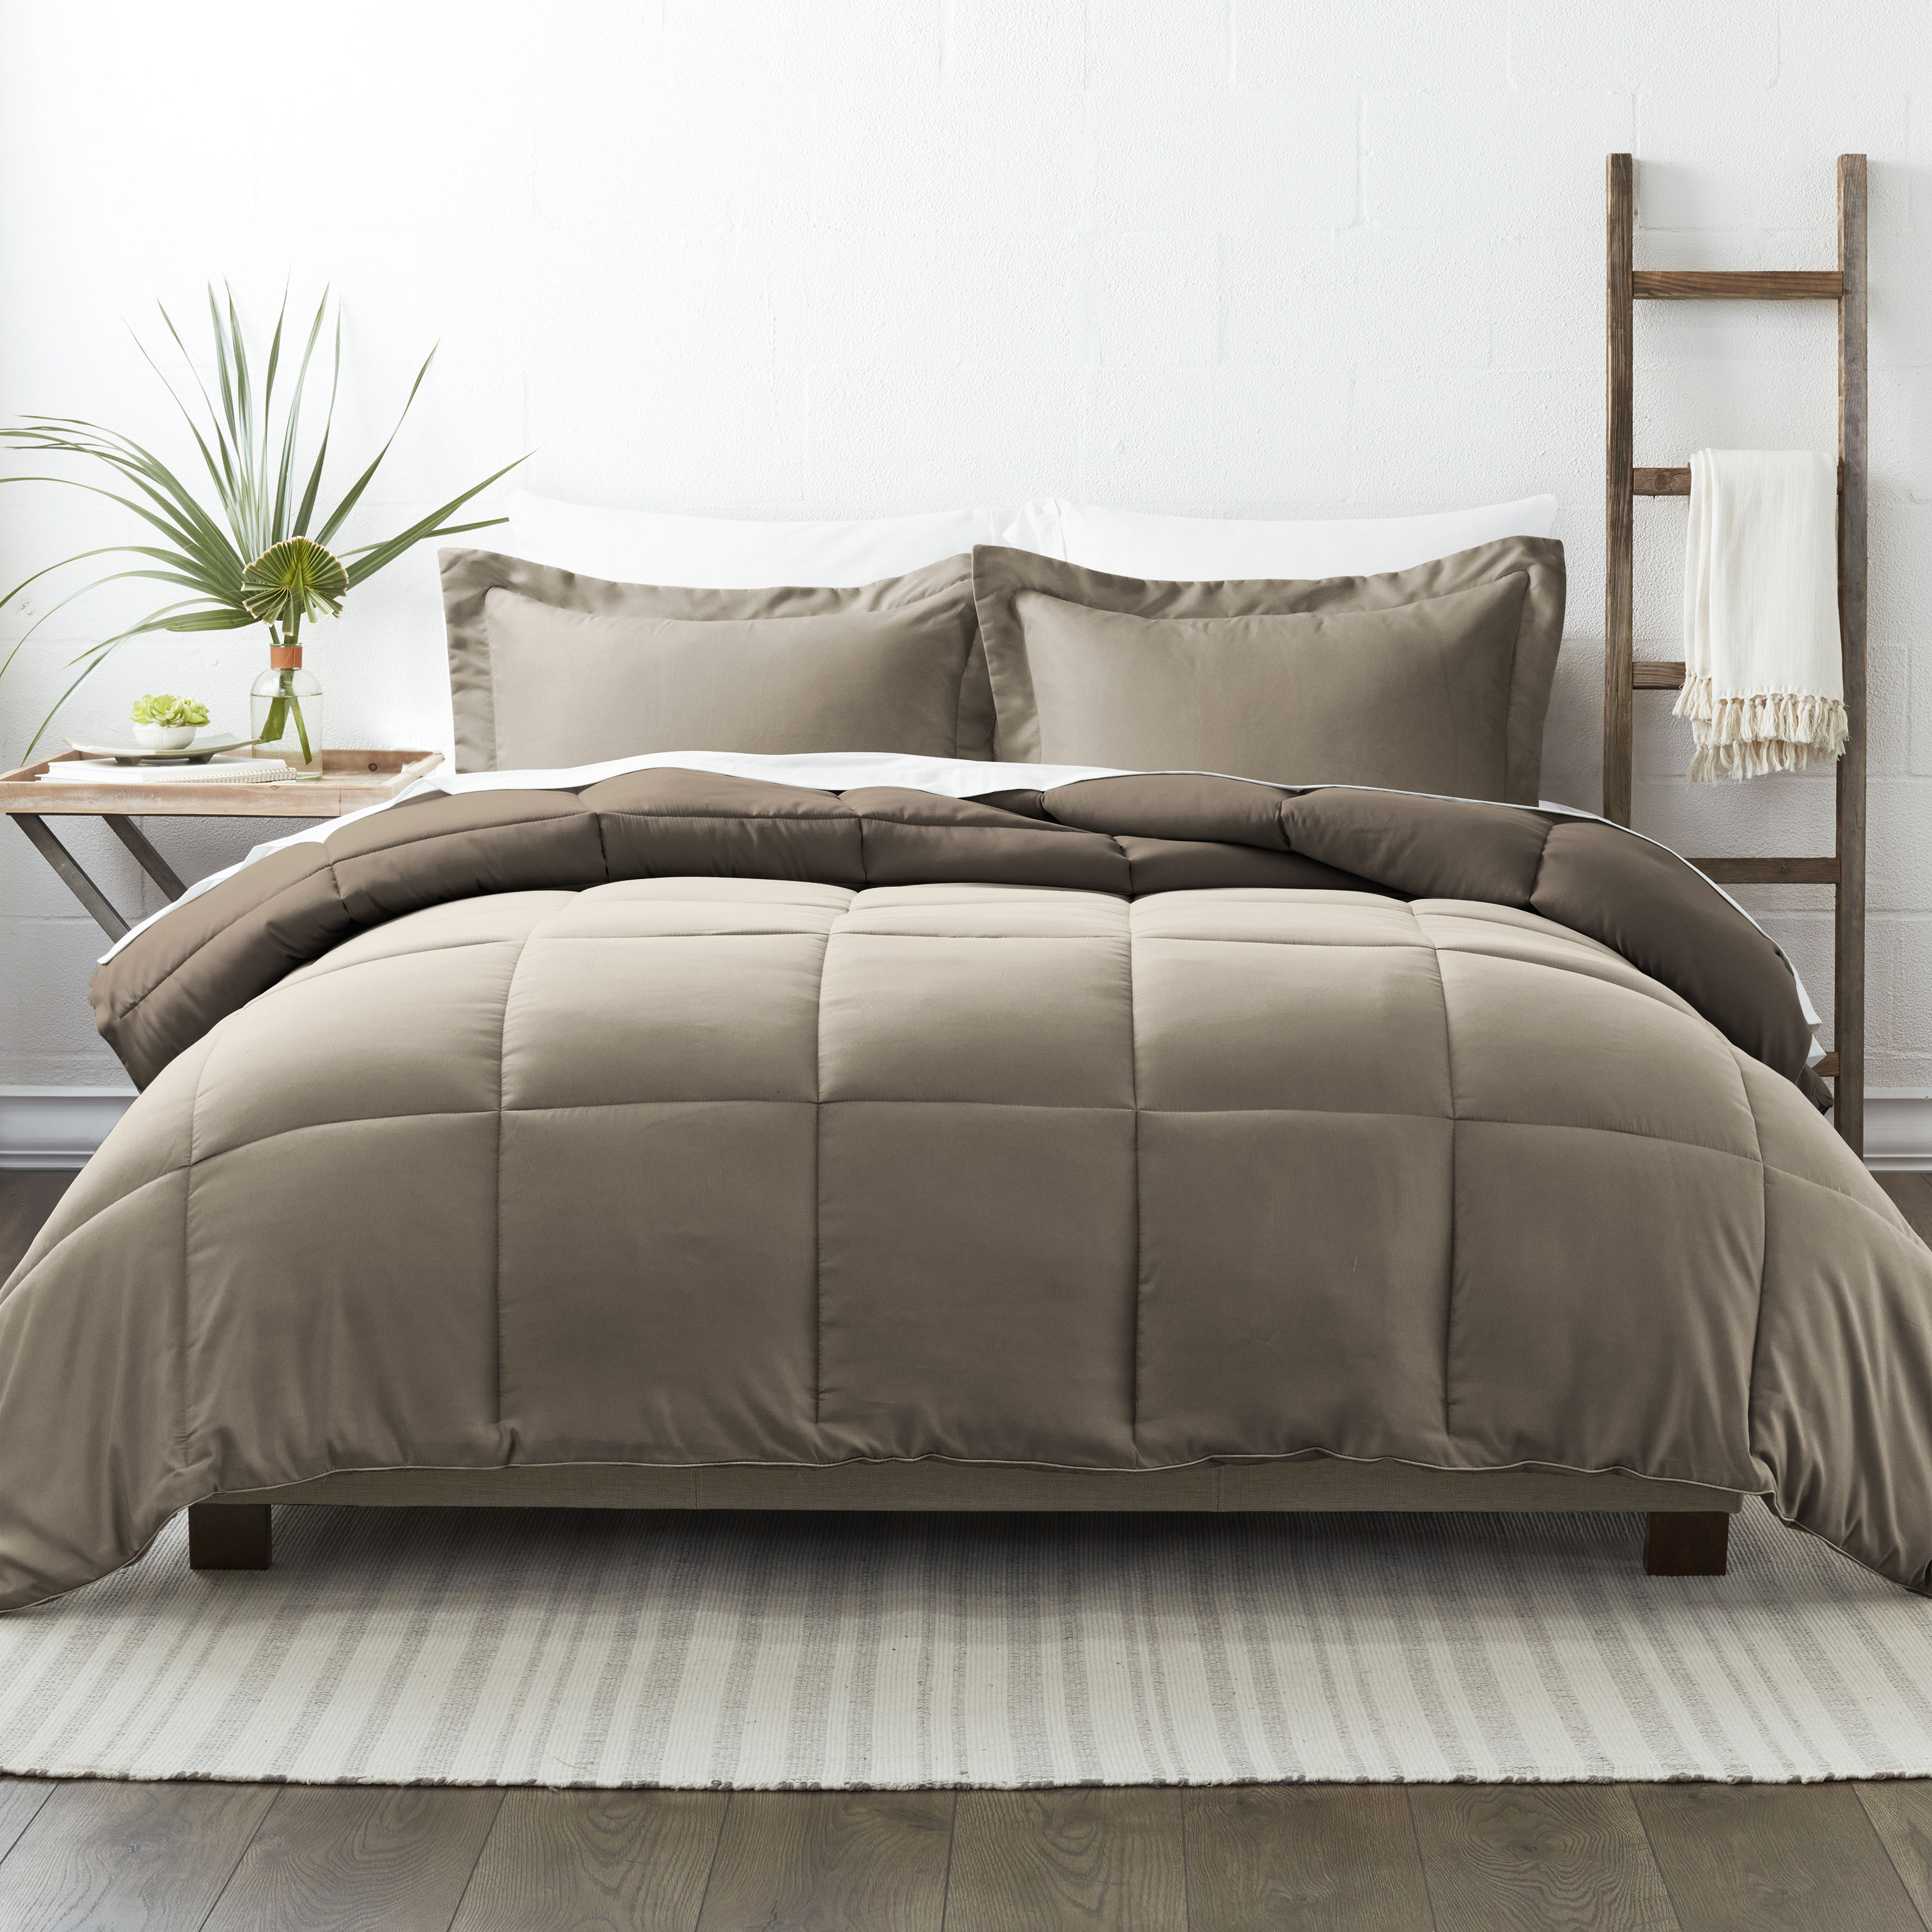 Twin XL Comforter Brown Khaki Home Design Bedding Down Alternative Twin 